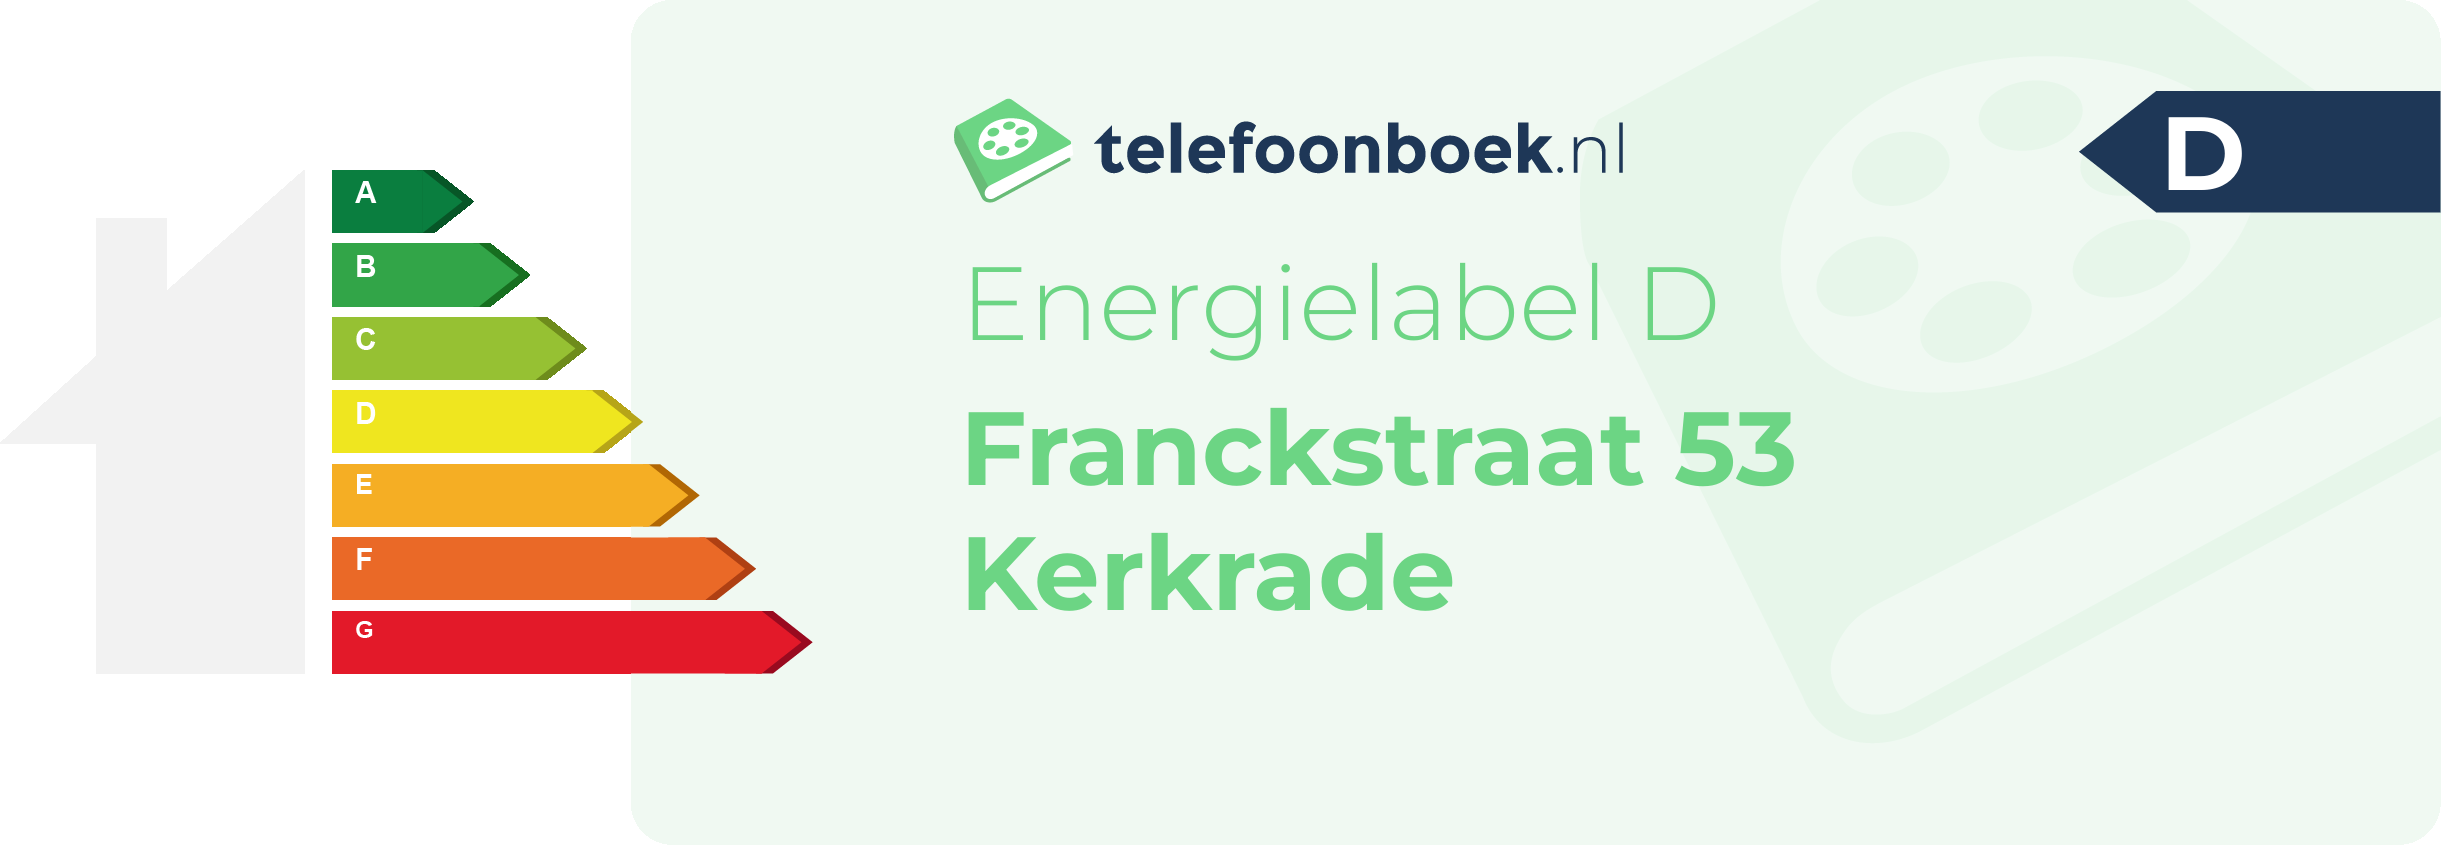 Energielabel Franckstraat 53 Kerkrade